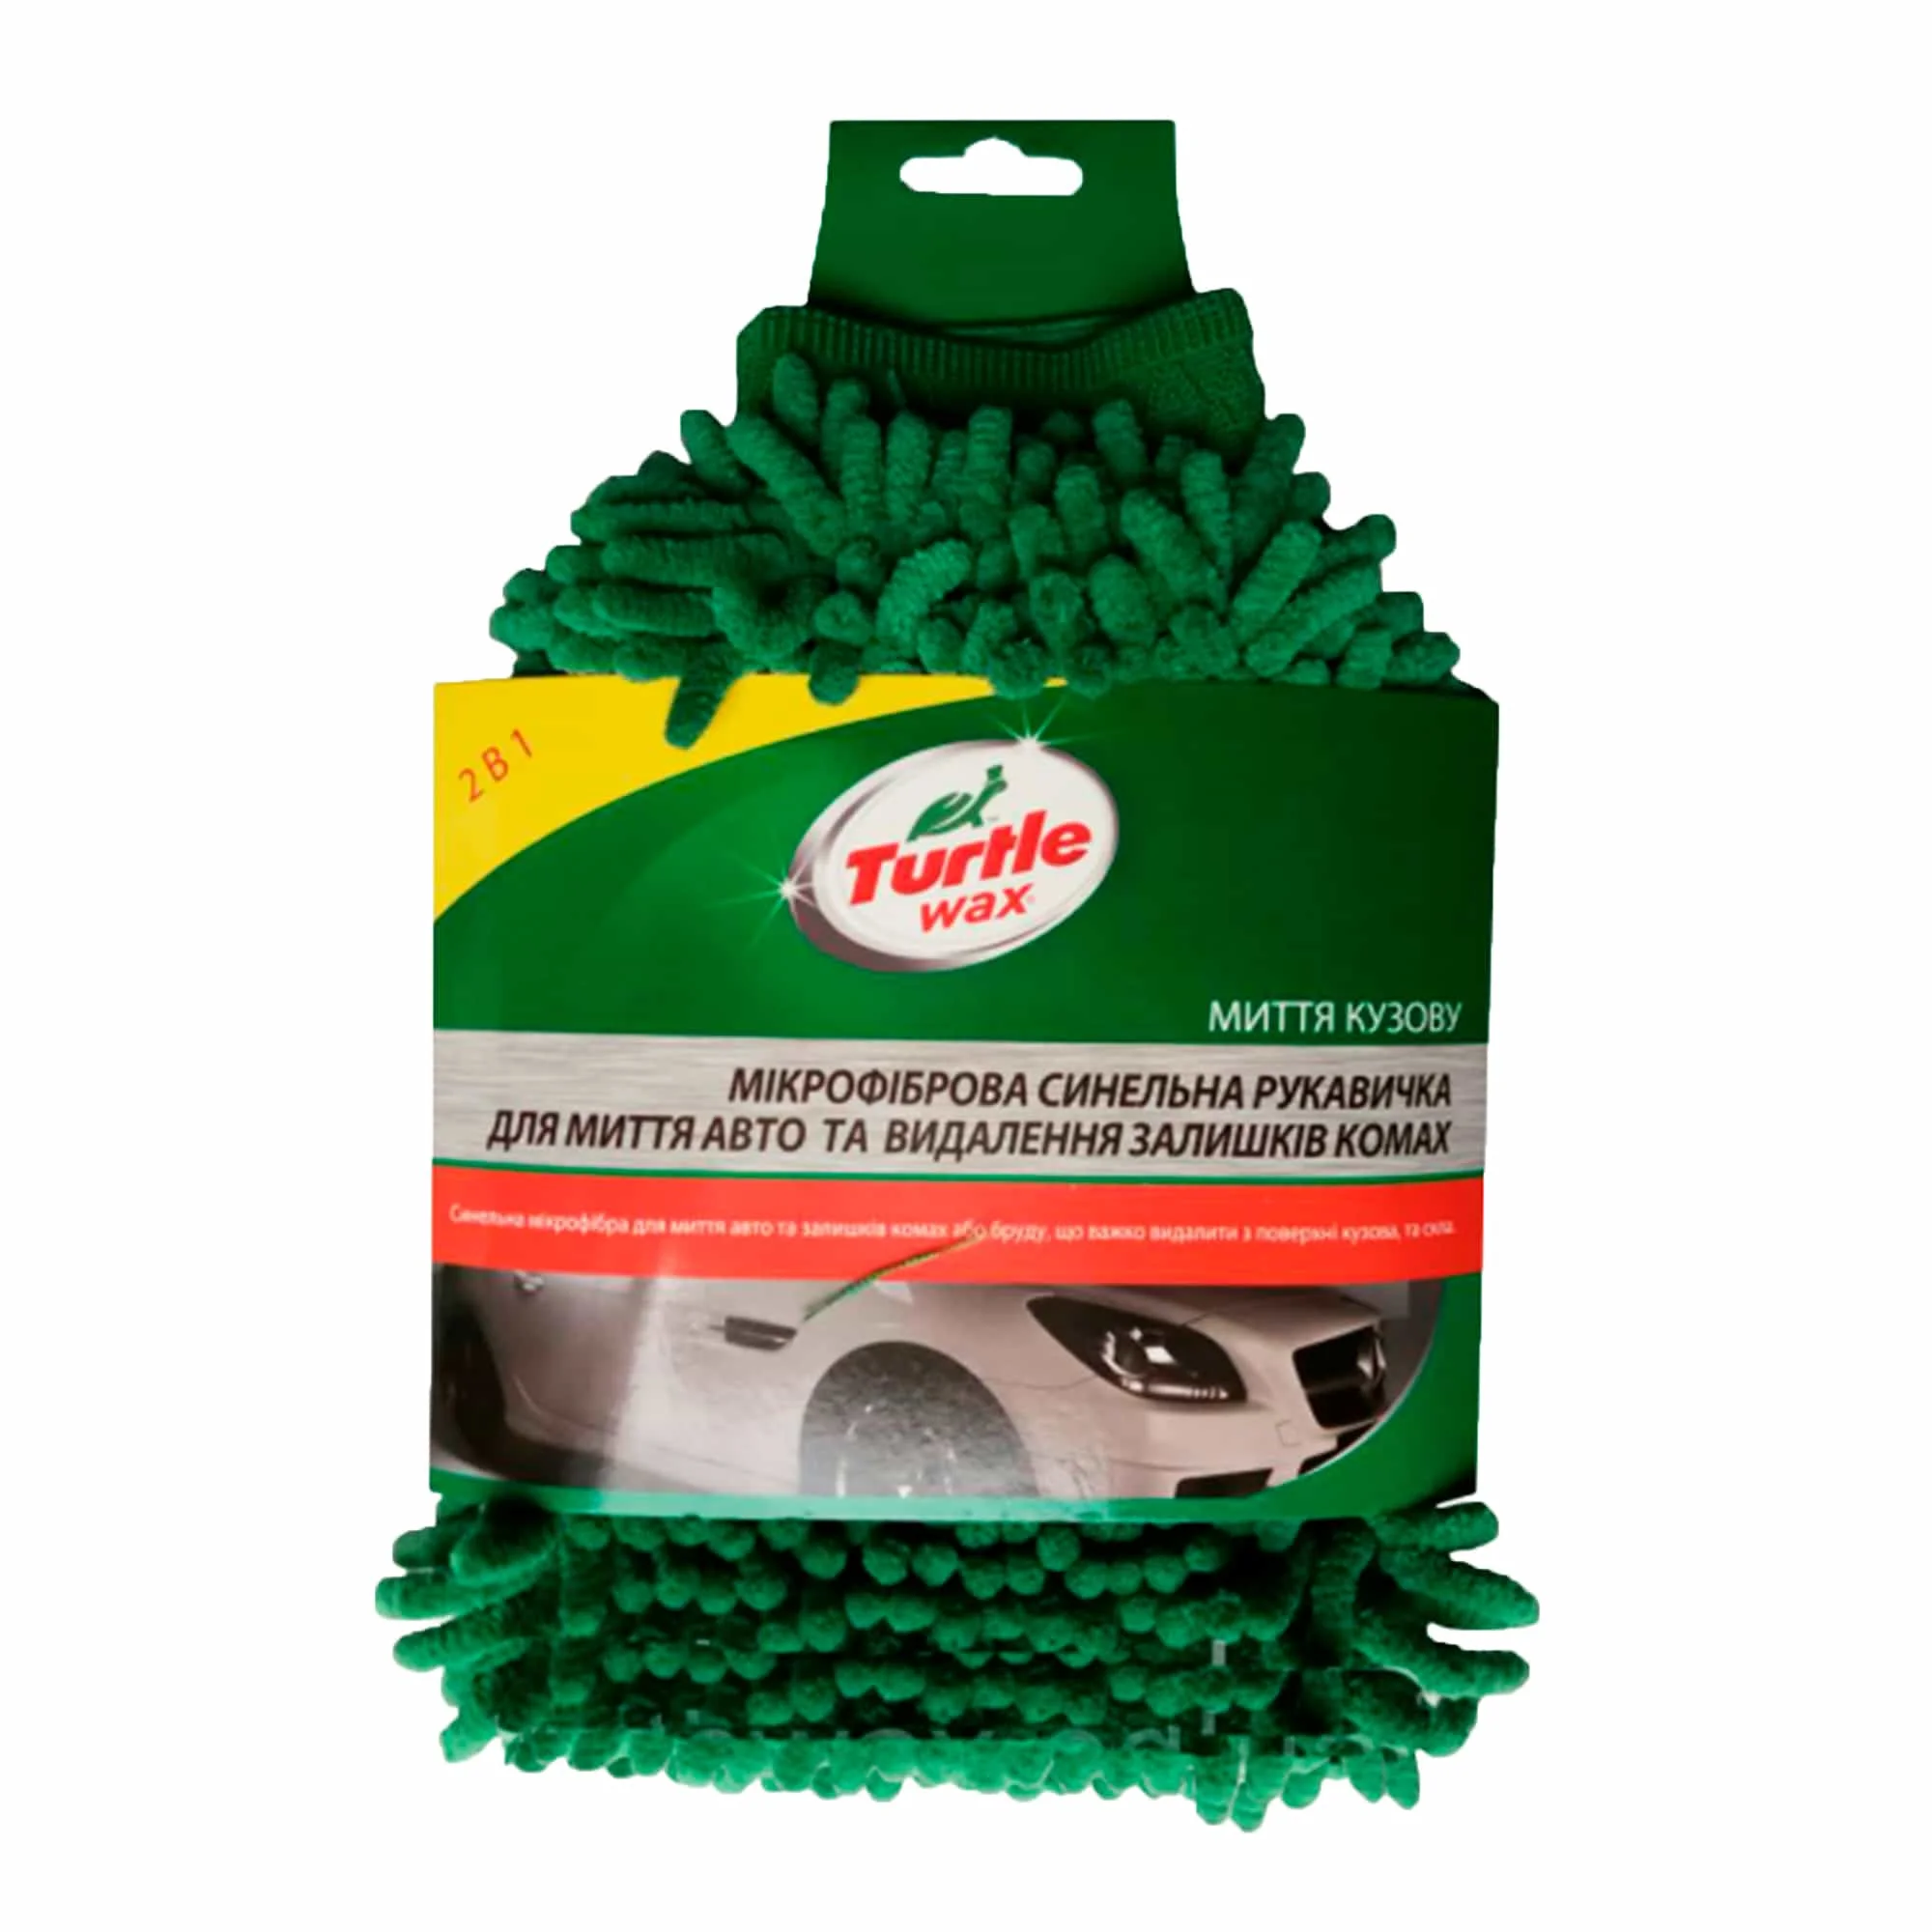 Рукавица Turtle Wax для мытья и полировки кузова (008594)